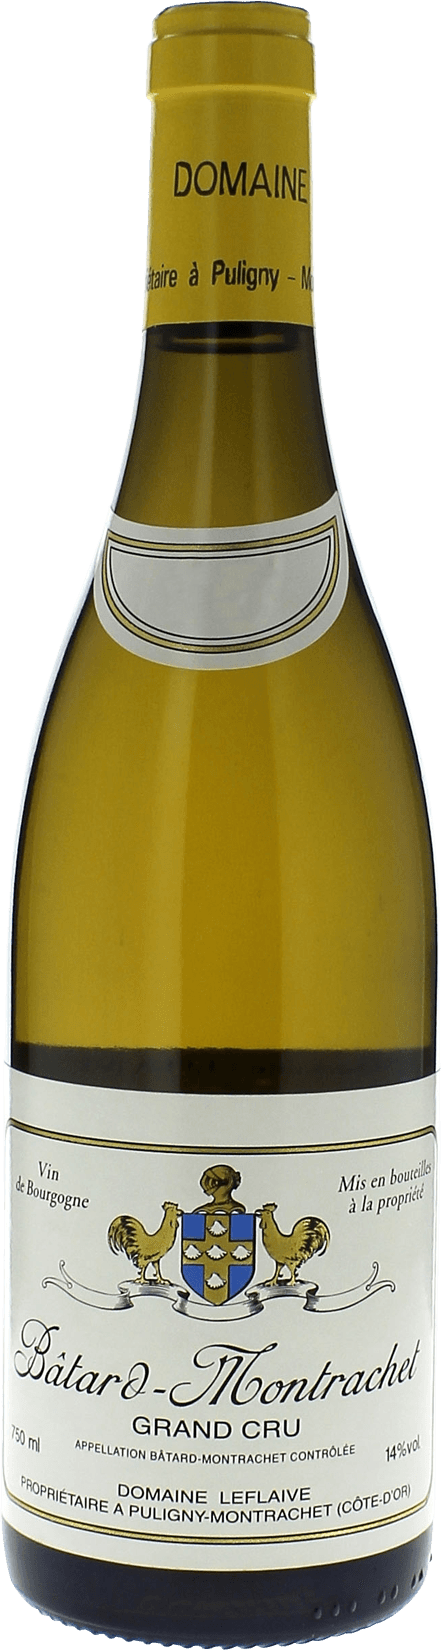 Batard montrachet grand cru 2017 Domaine LEFLAIVE, Bourgogne blanc